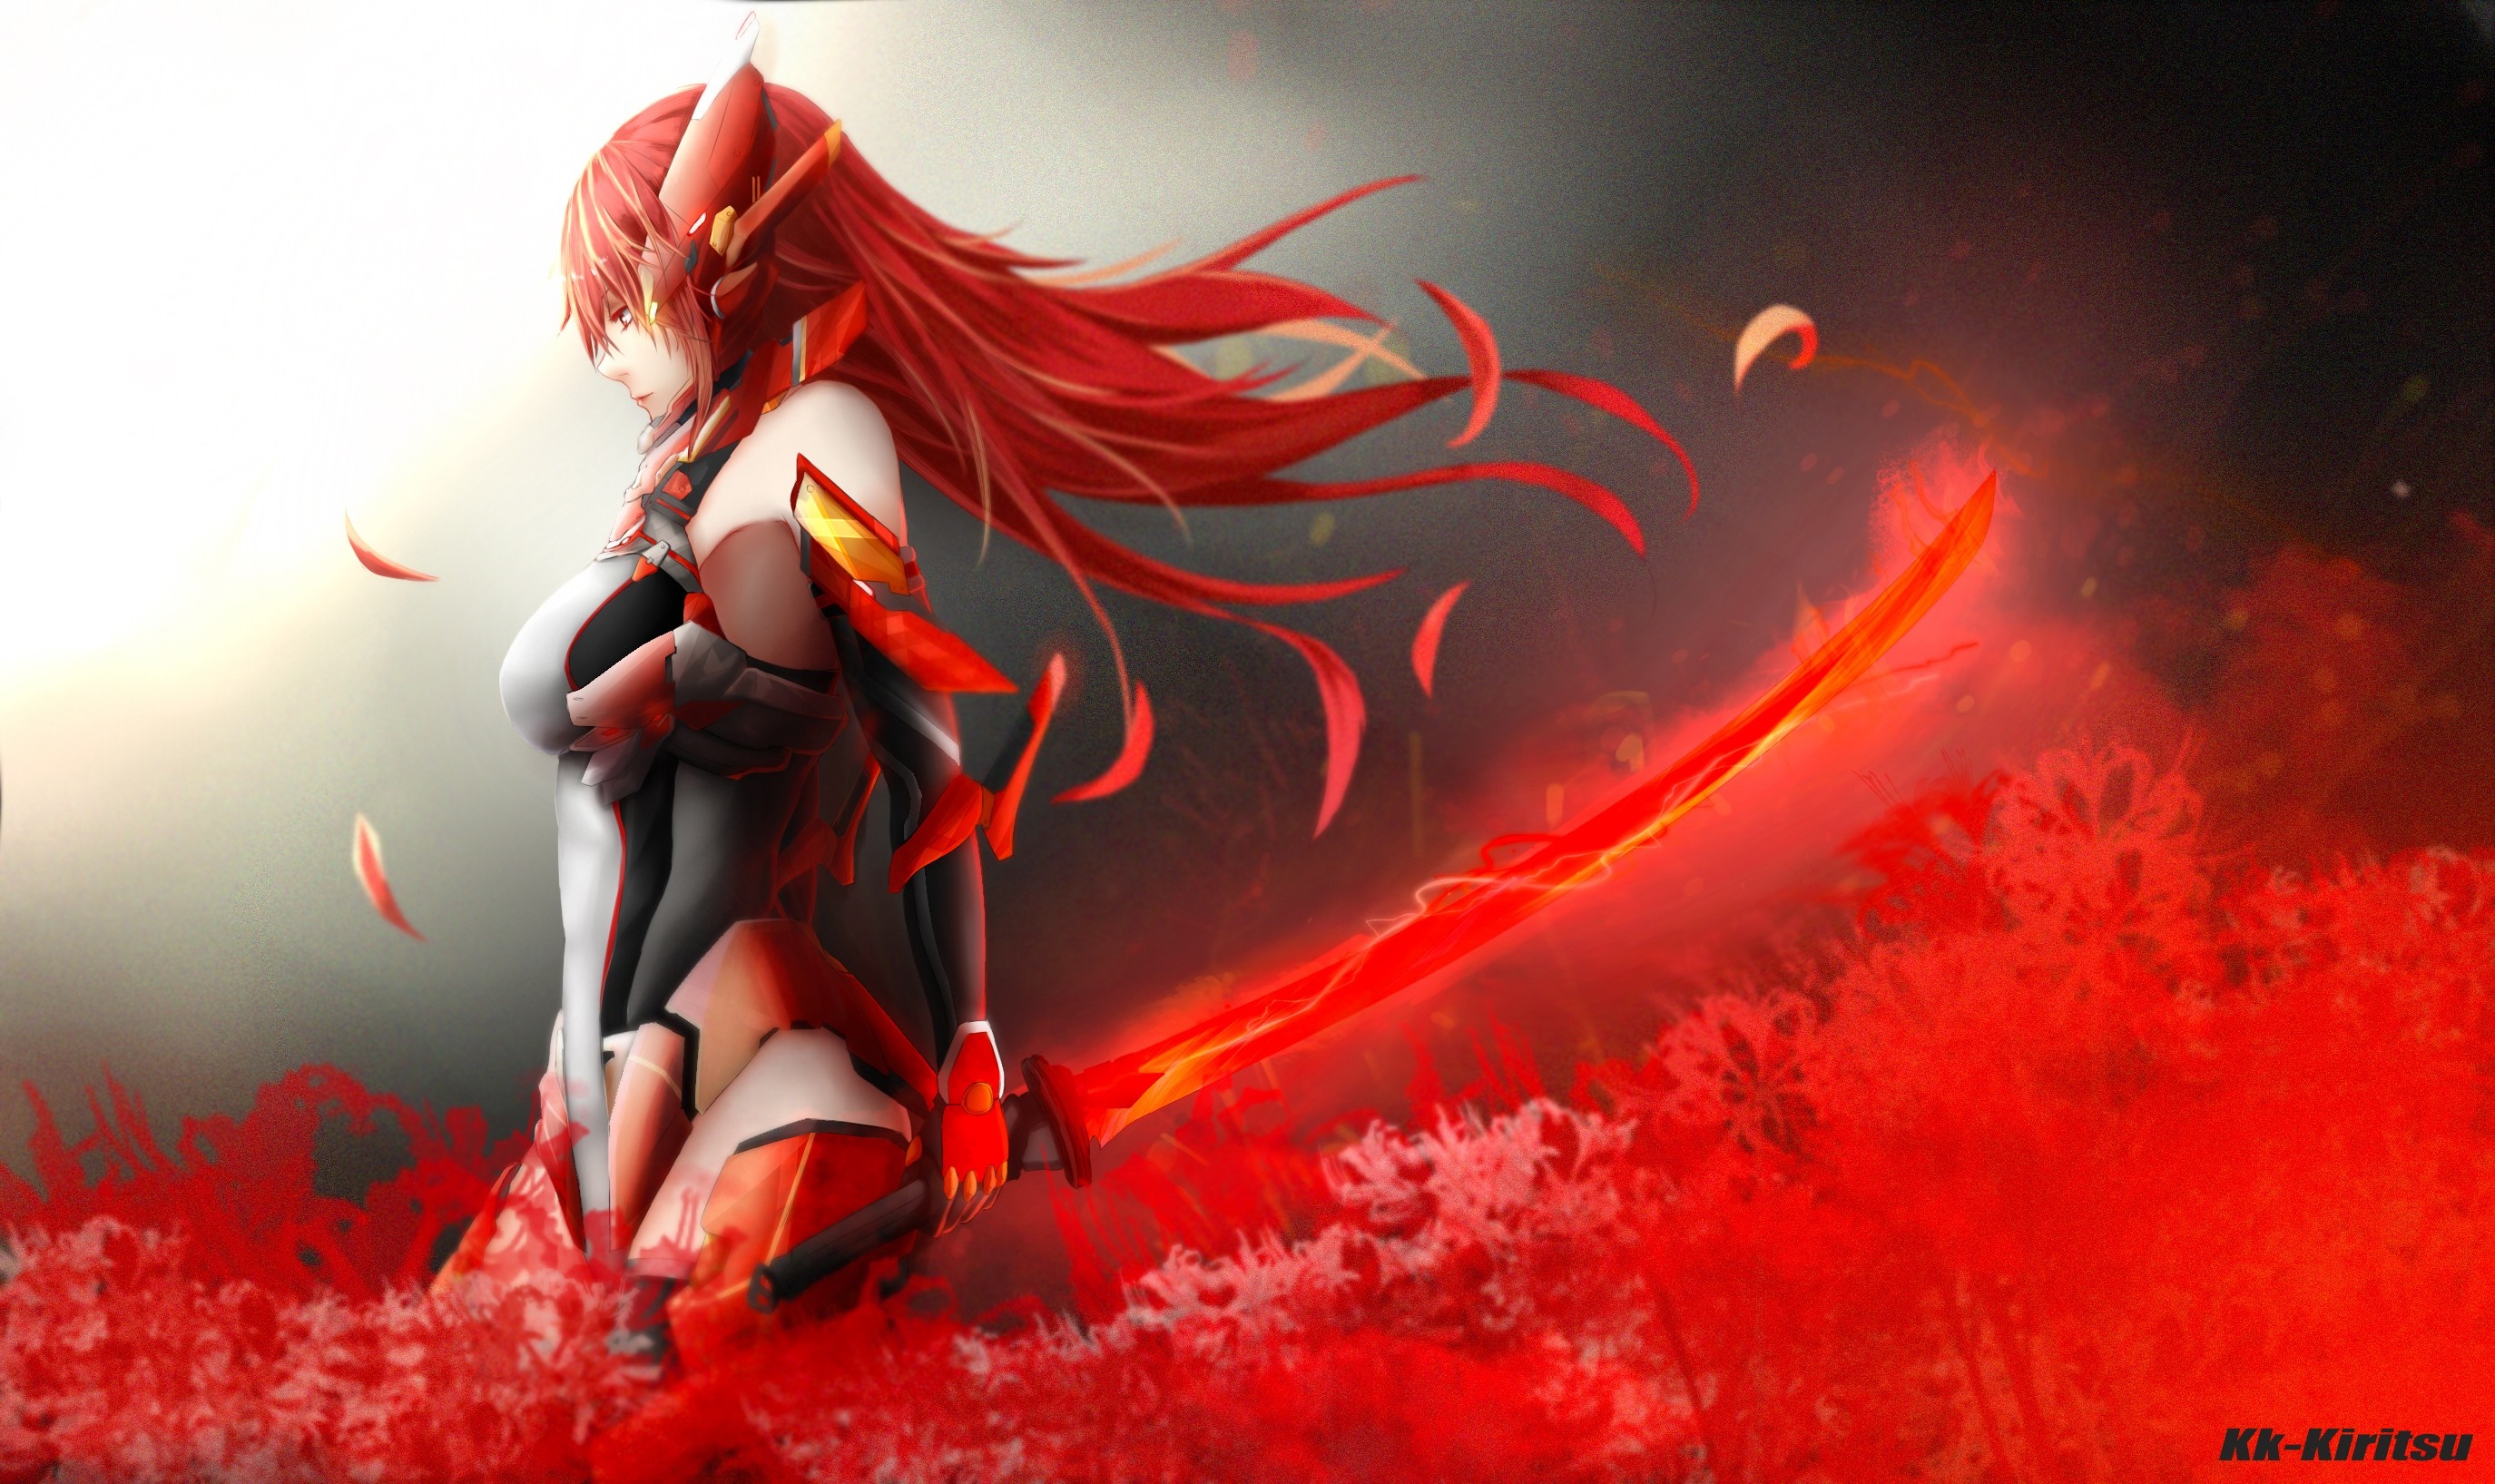 Redhead fantasy girl long hair anime anime girls red weapon red eyes sword screenshot puter wallpaper fictional character geological phenomenon